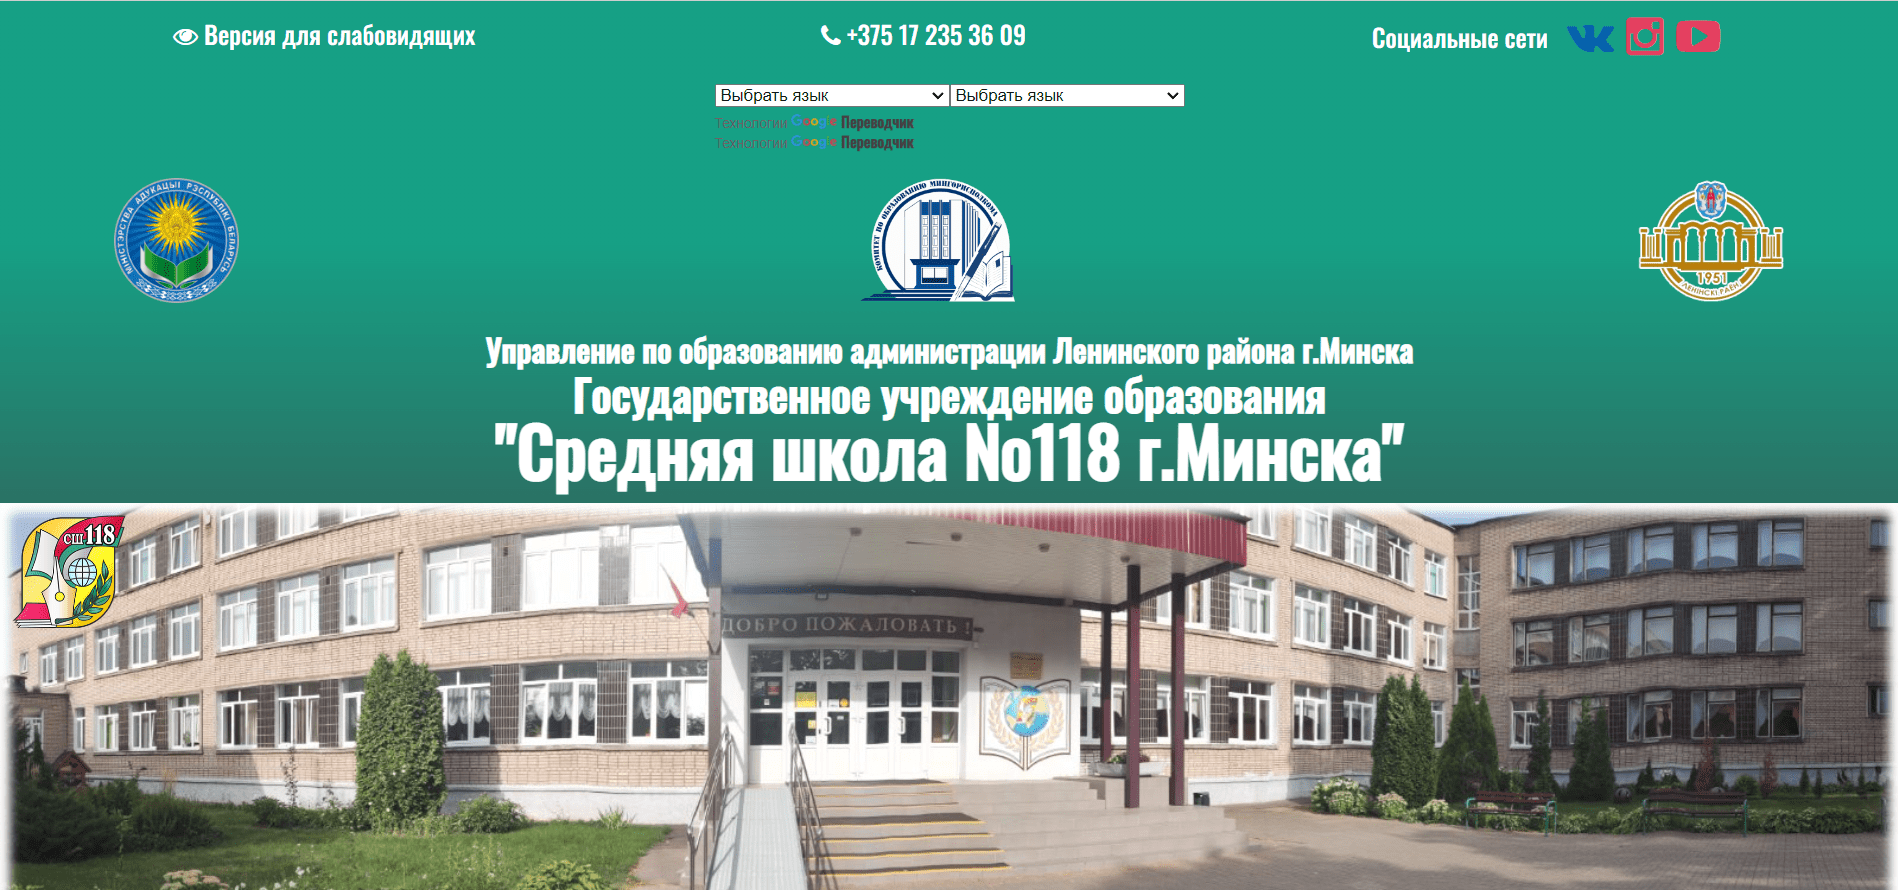 Средняя школа №118 г. Минска (sch118.minsk.edu.by)